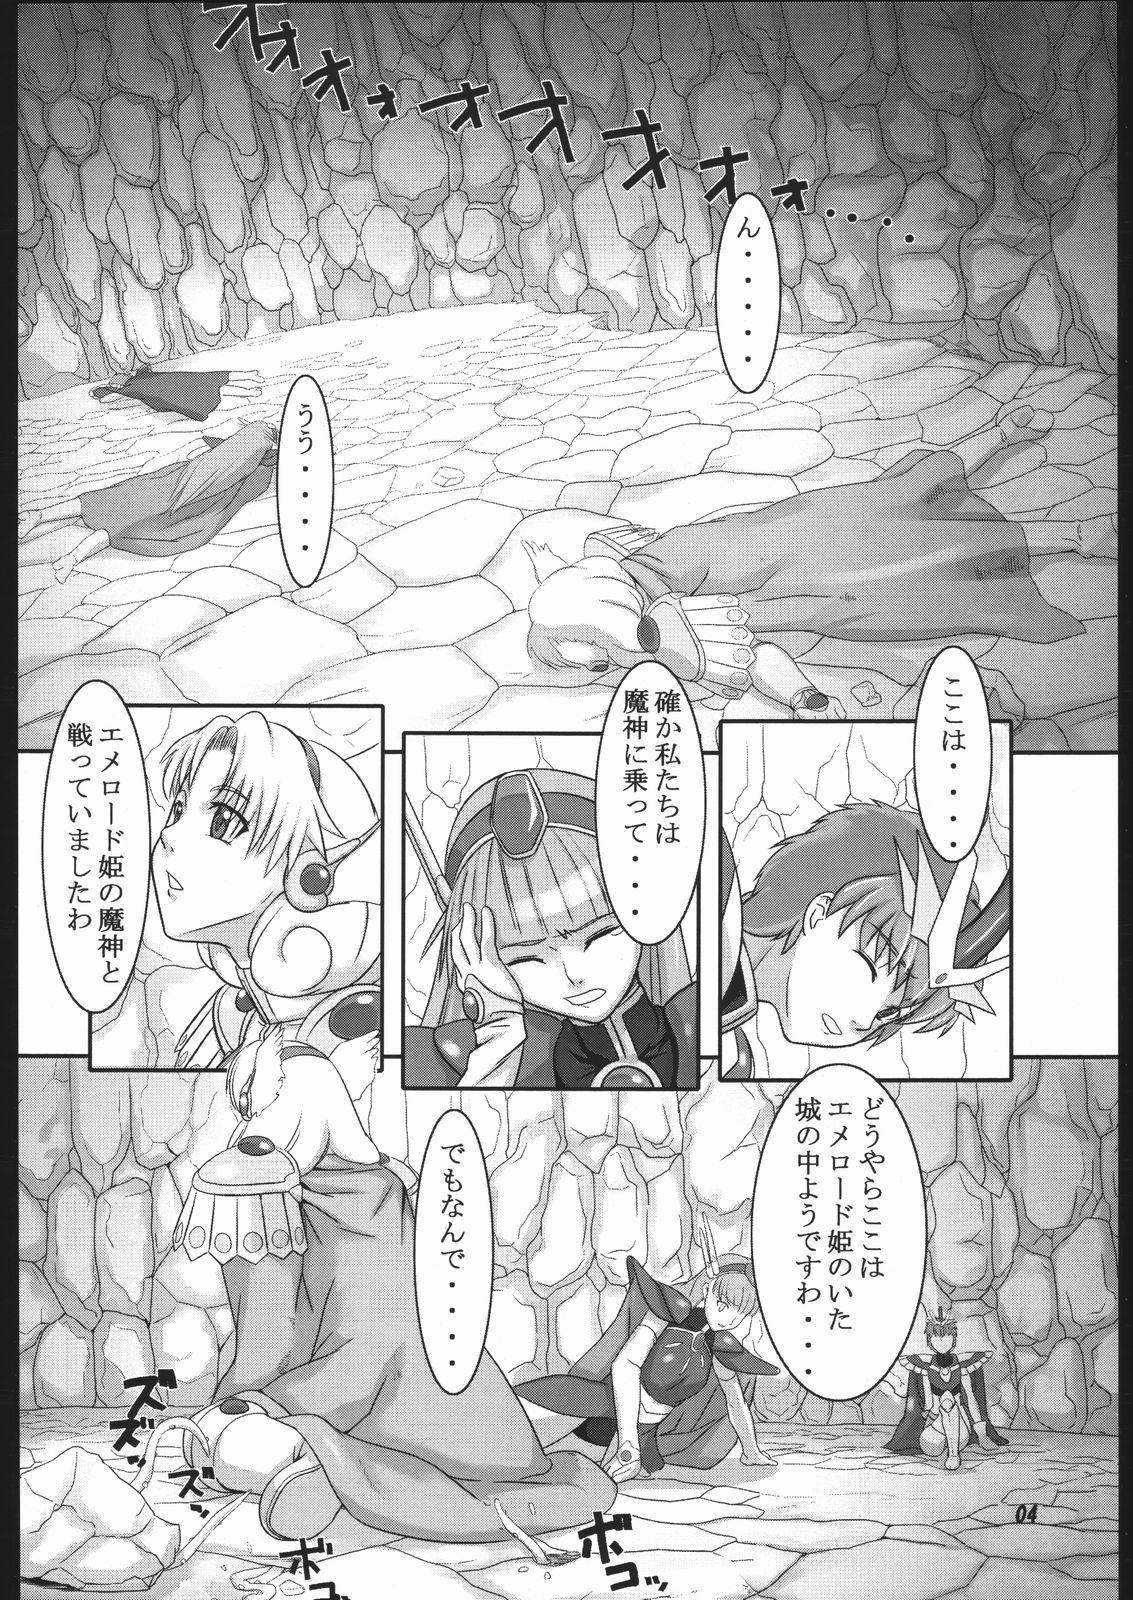 Toying Mahou no Ori - Magic knight rayearth Big - Page 3